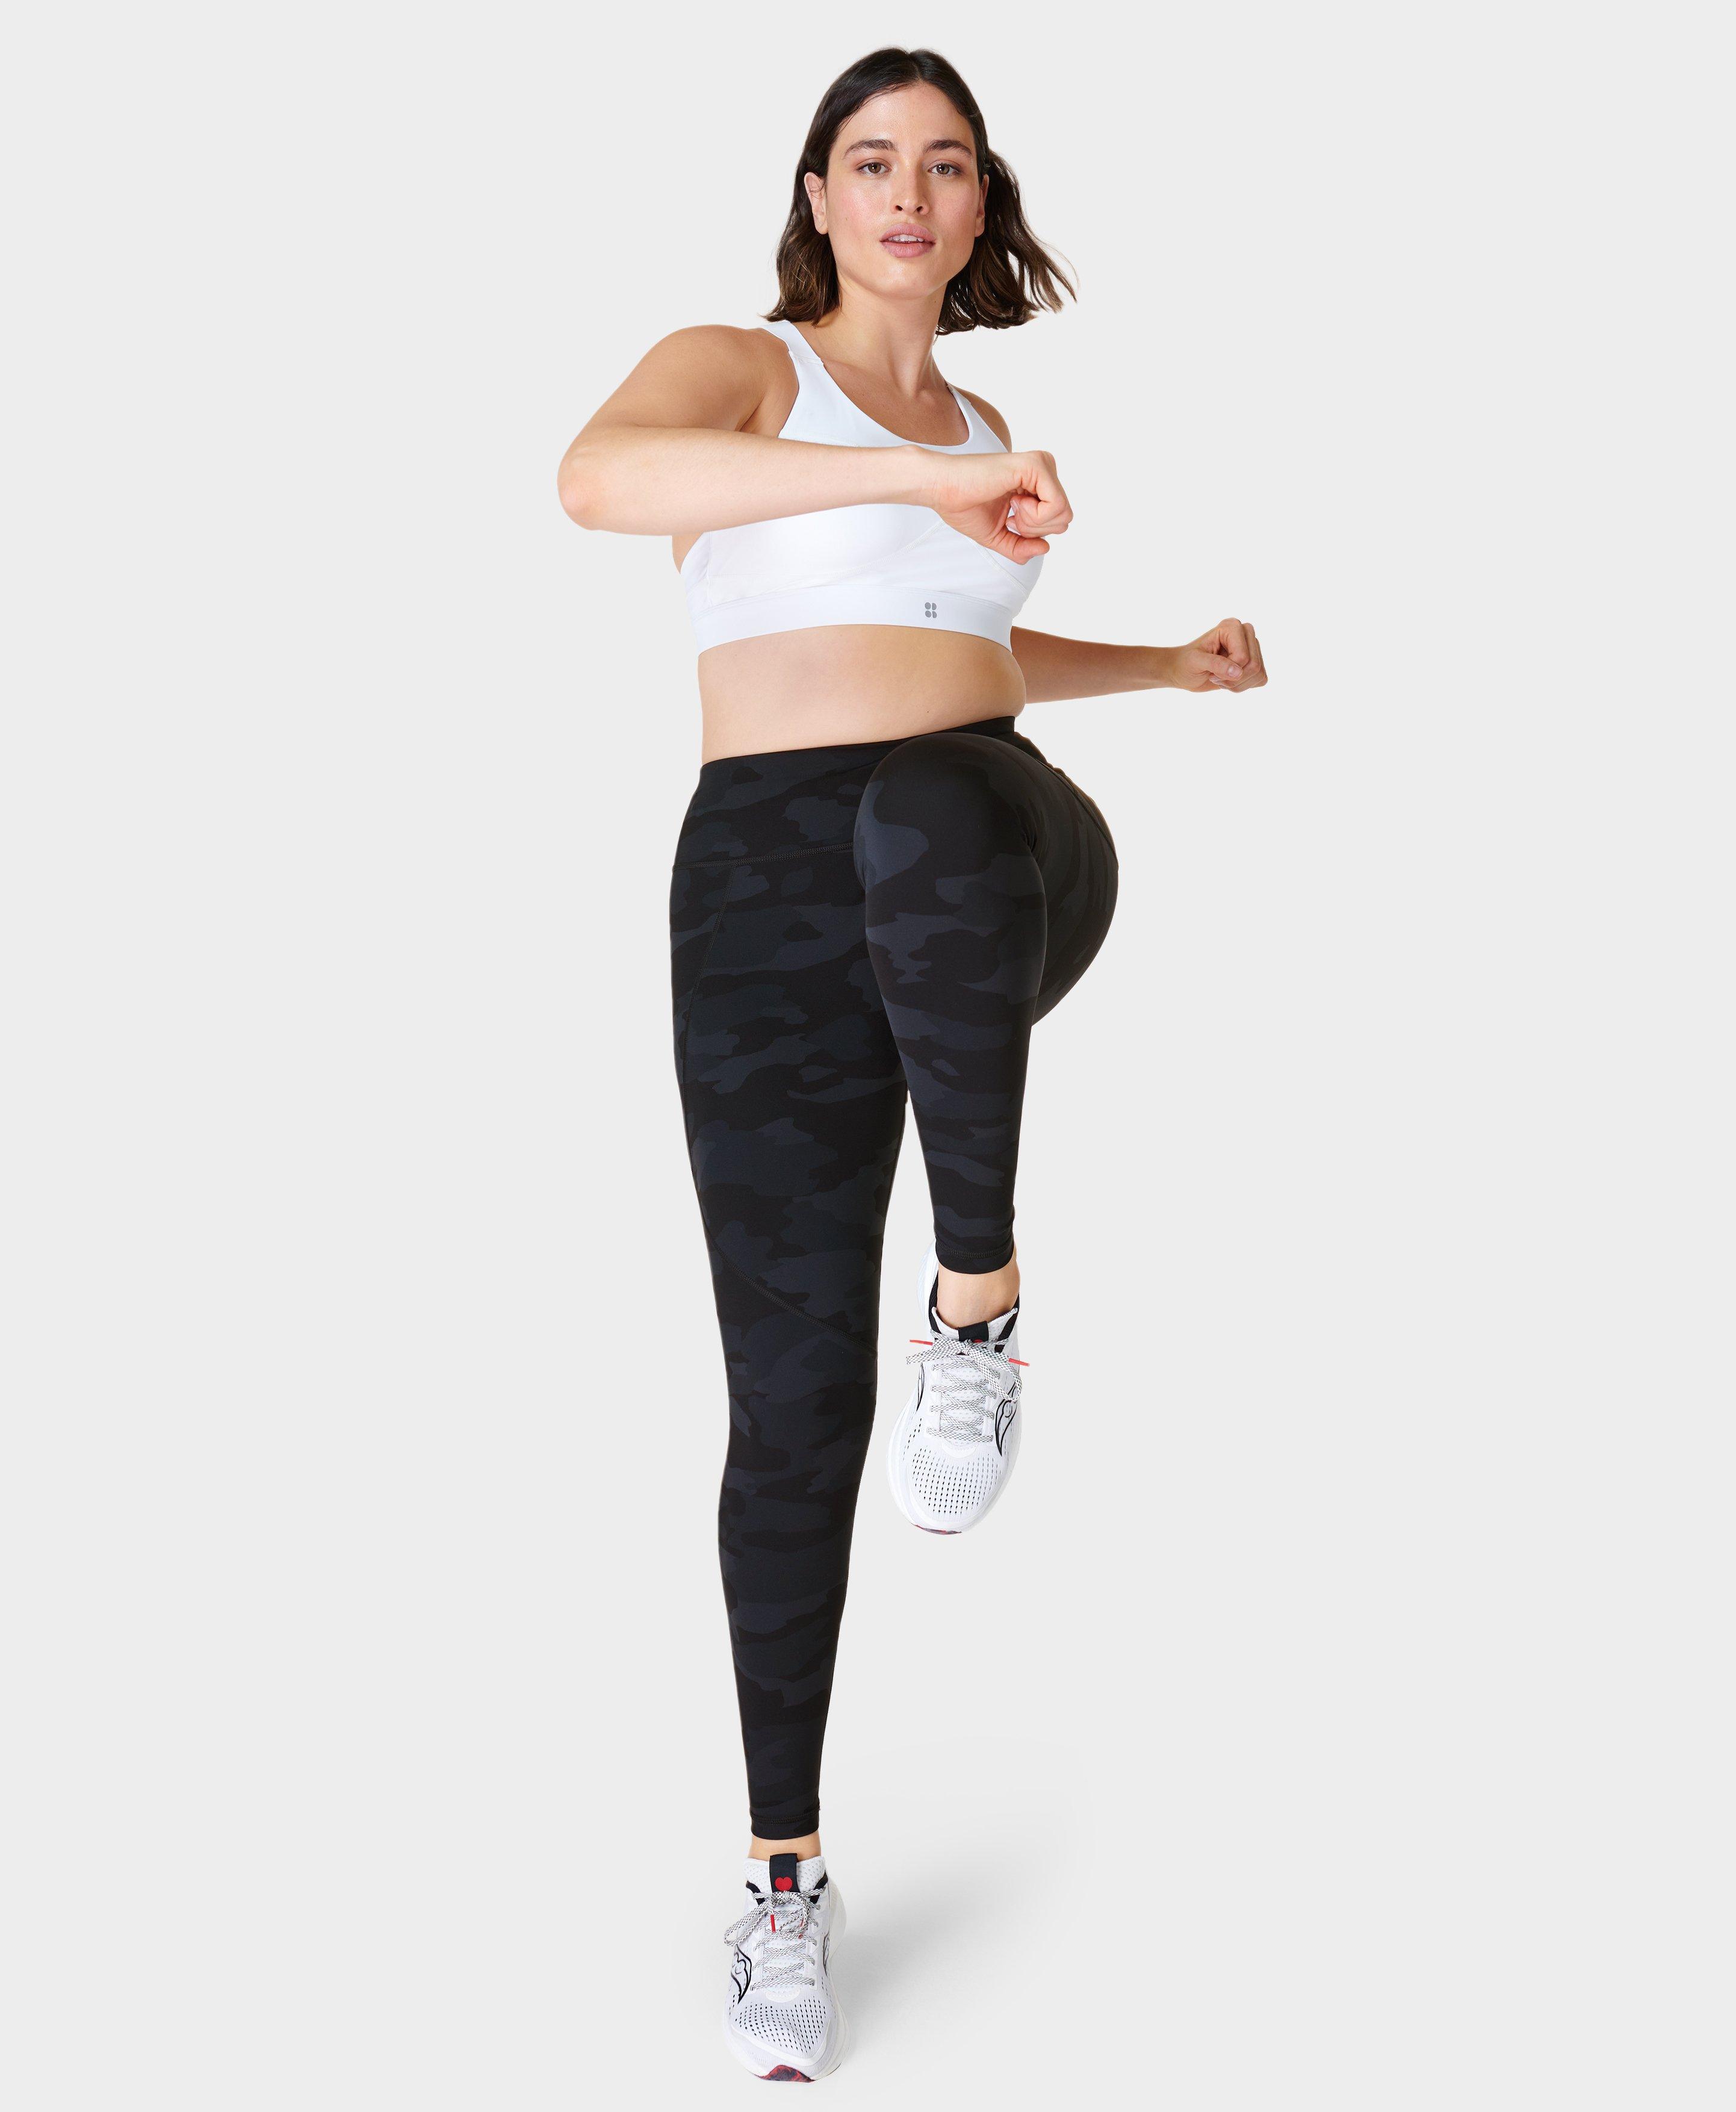 Leggings - Camouflage Black - Running - Yoga Pants - Fitness - Gym